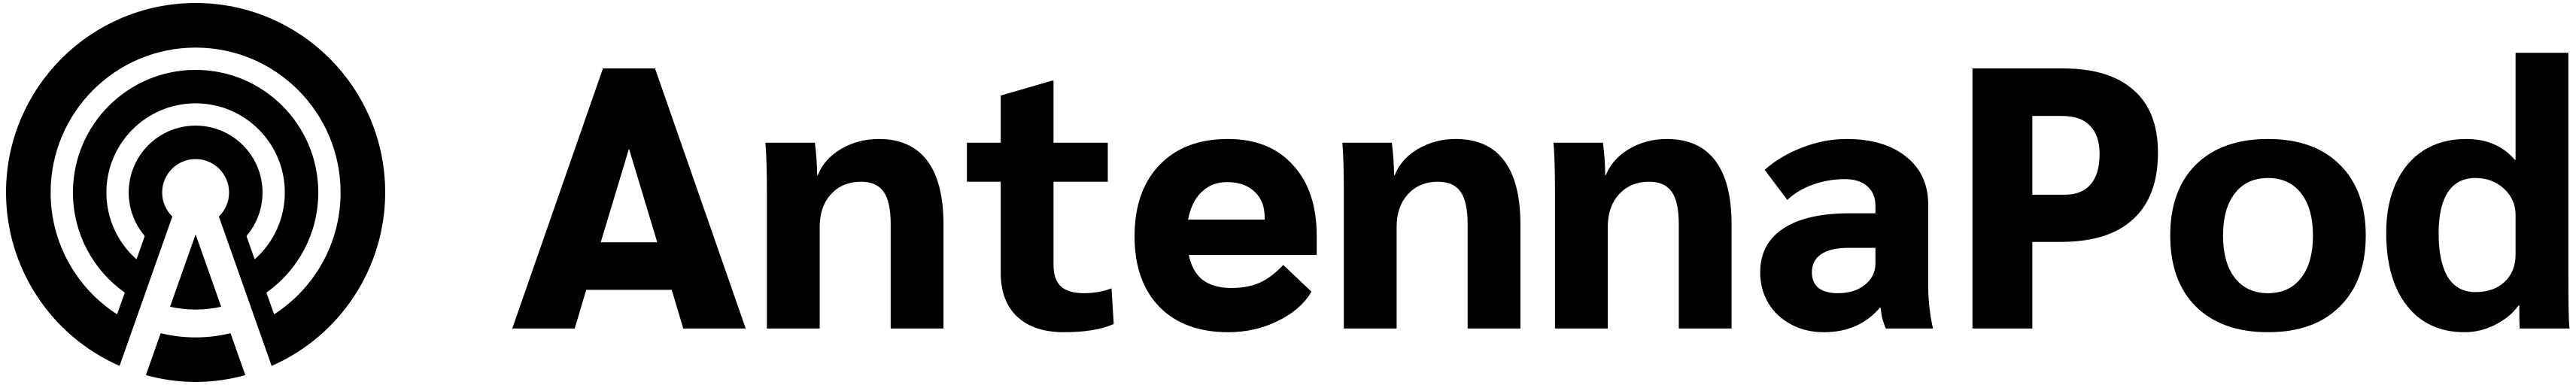 logo-full-horizontal-black-out.png